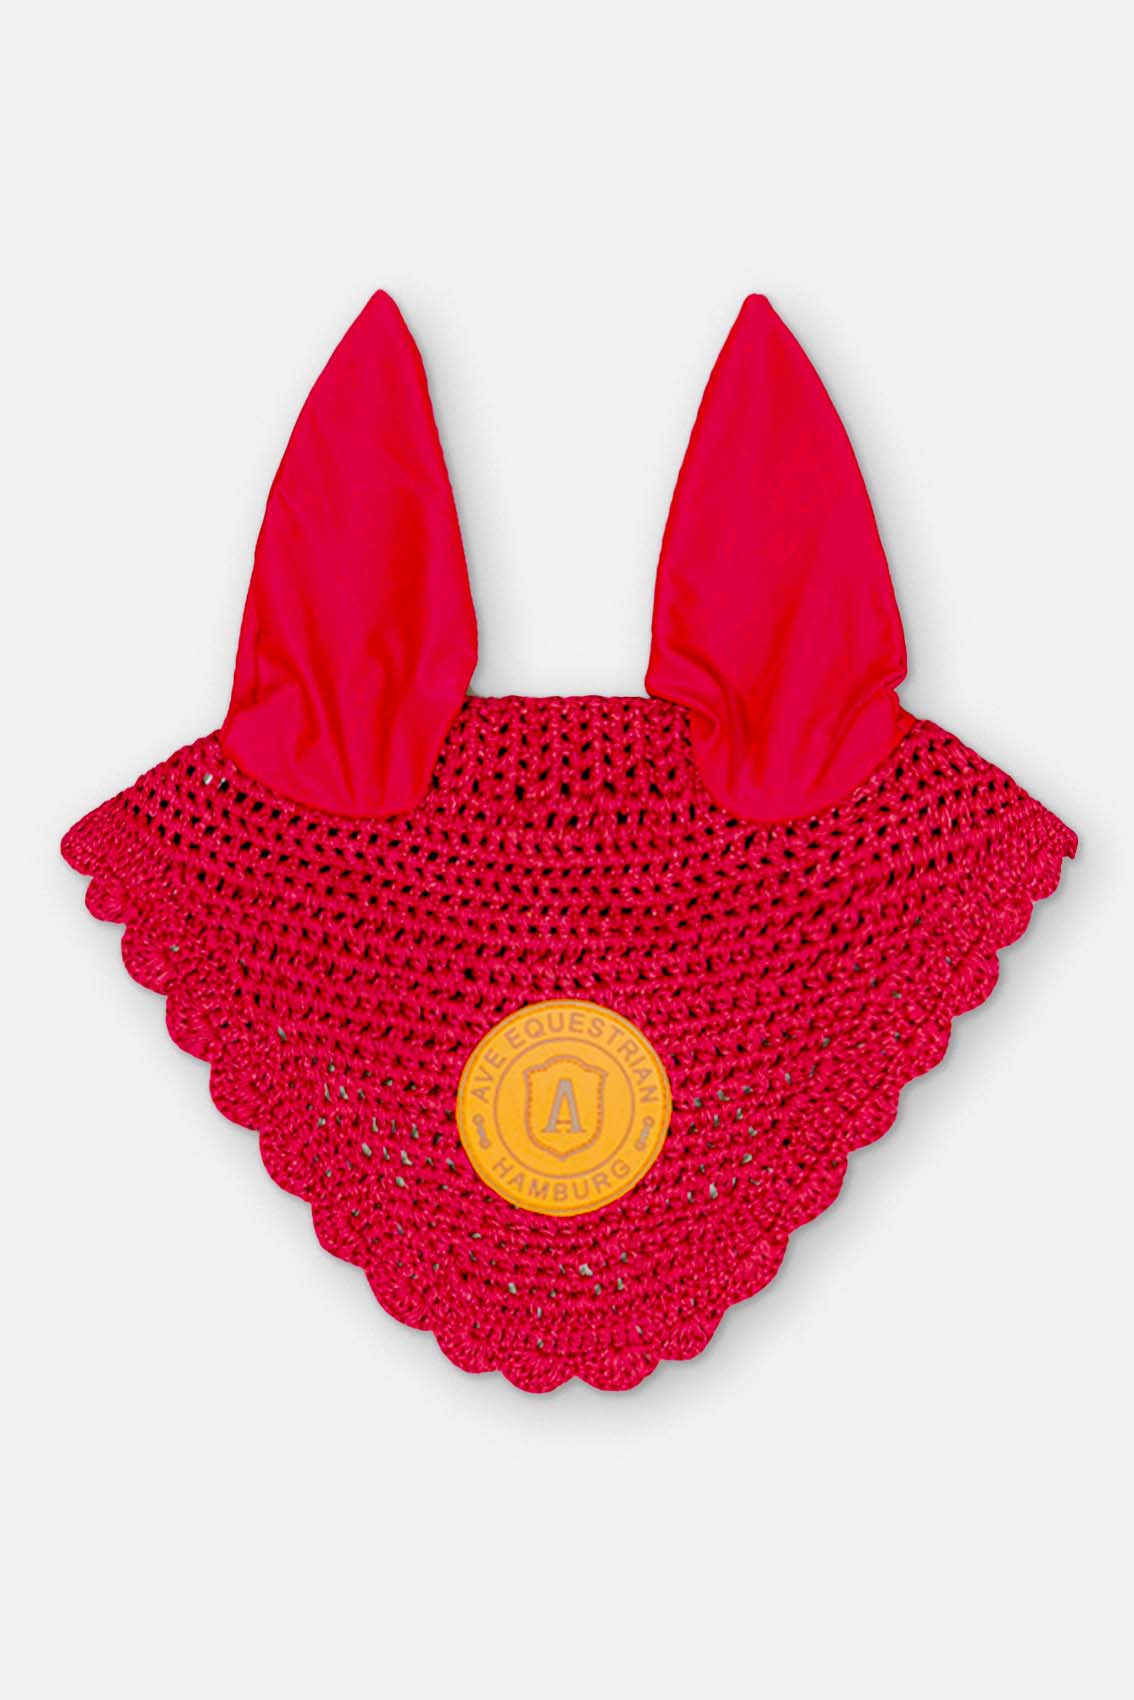 Fly cap hand-crocheted